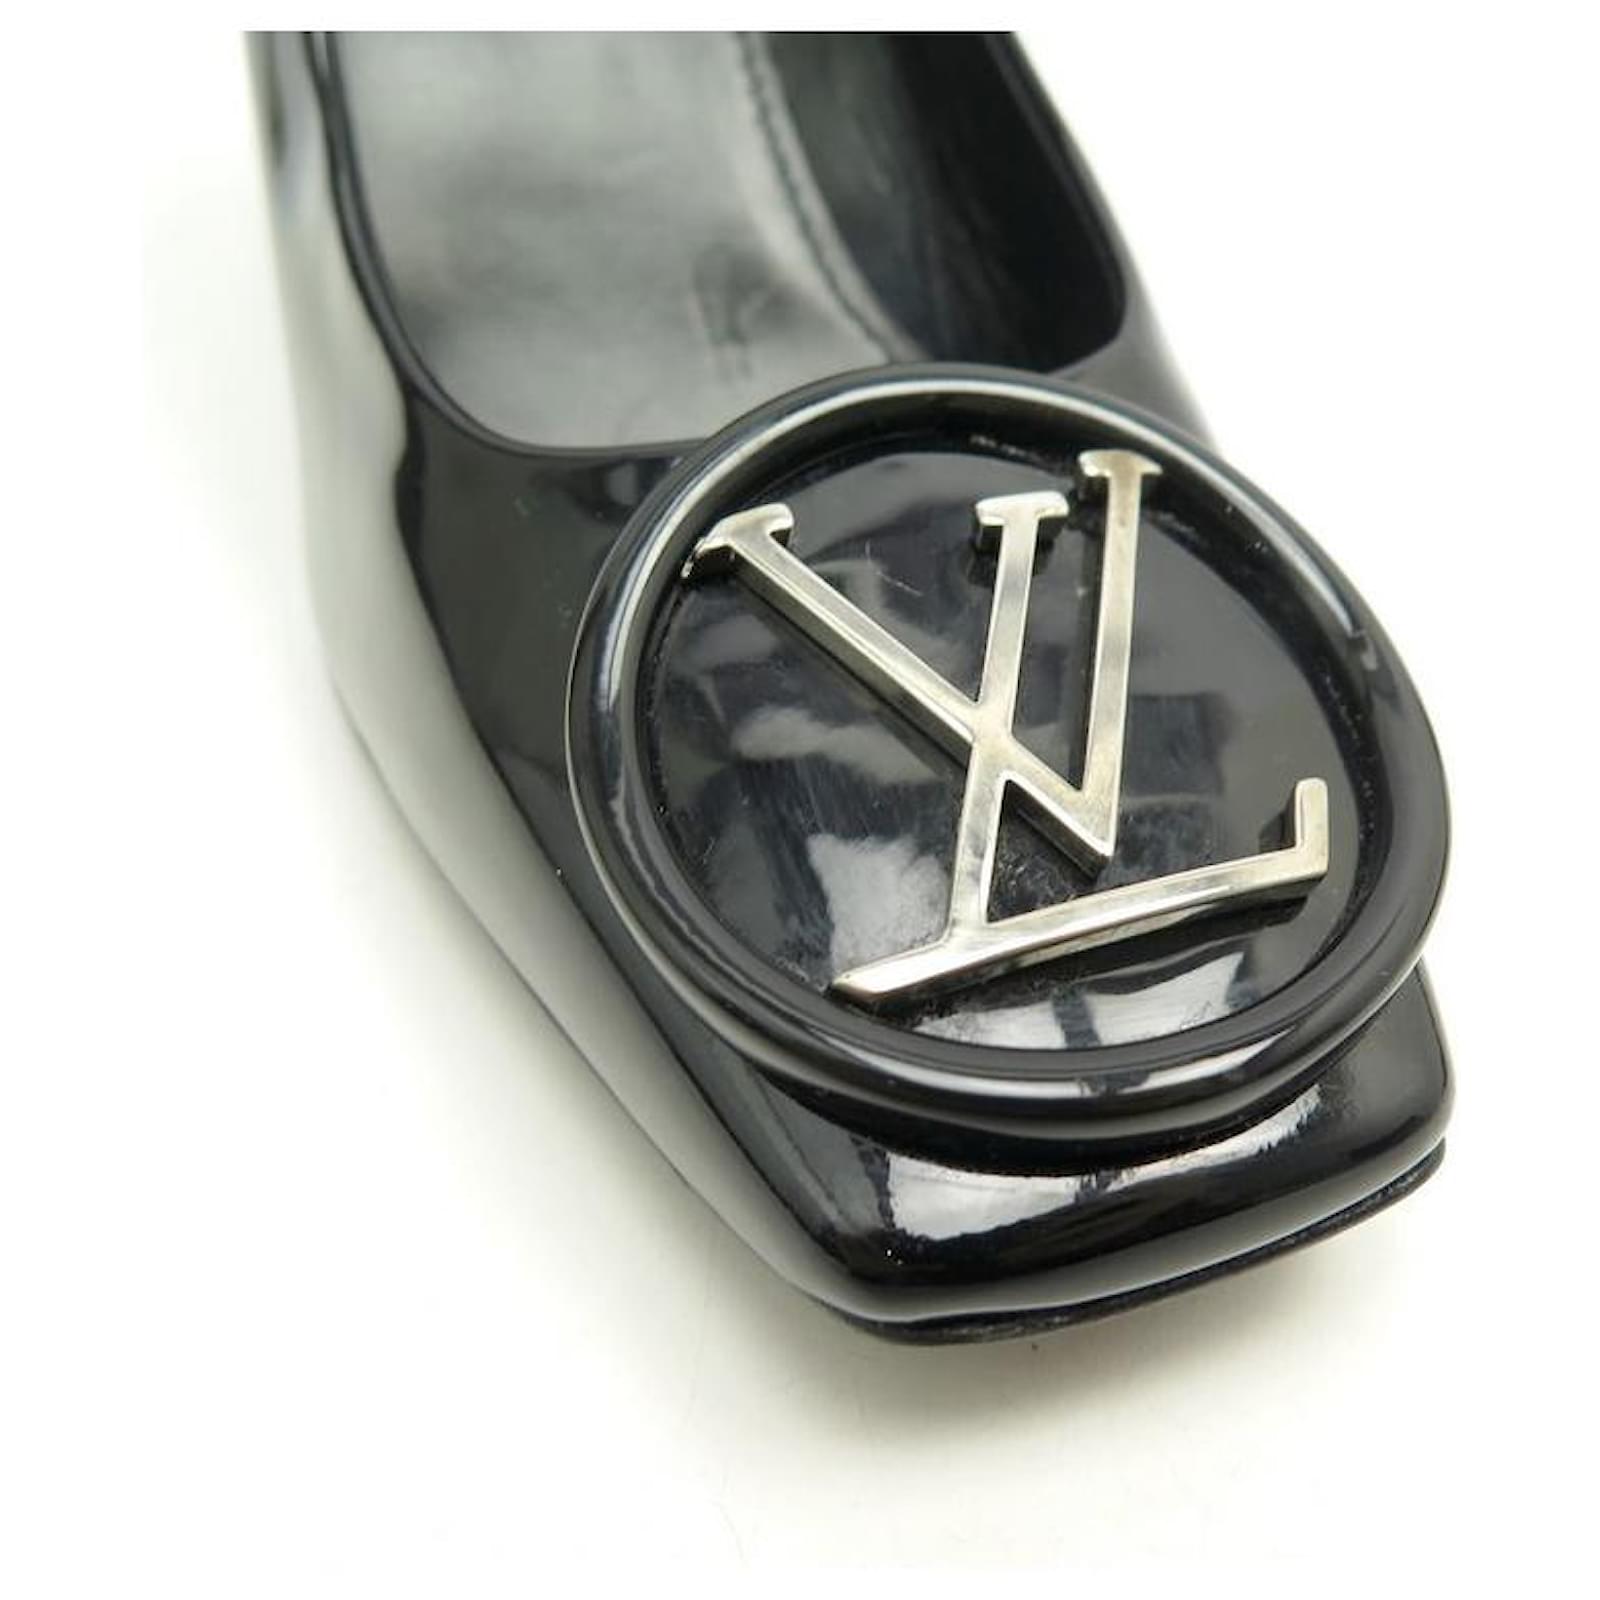 Louis Vuitton, Shoes, The Fabulous Lv Madeleine Pumps From Louis Vuitton